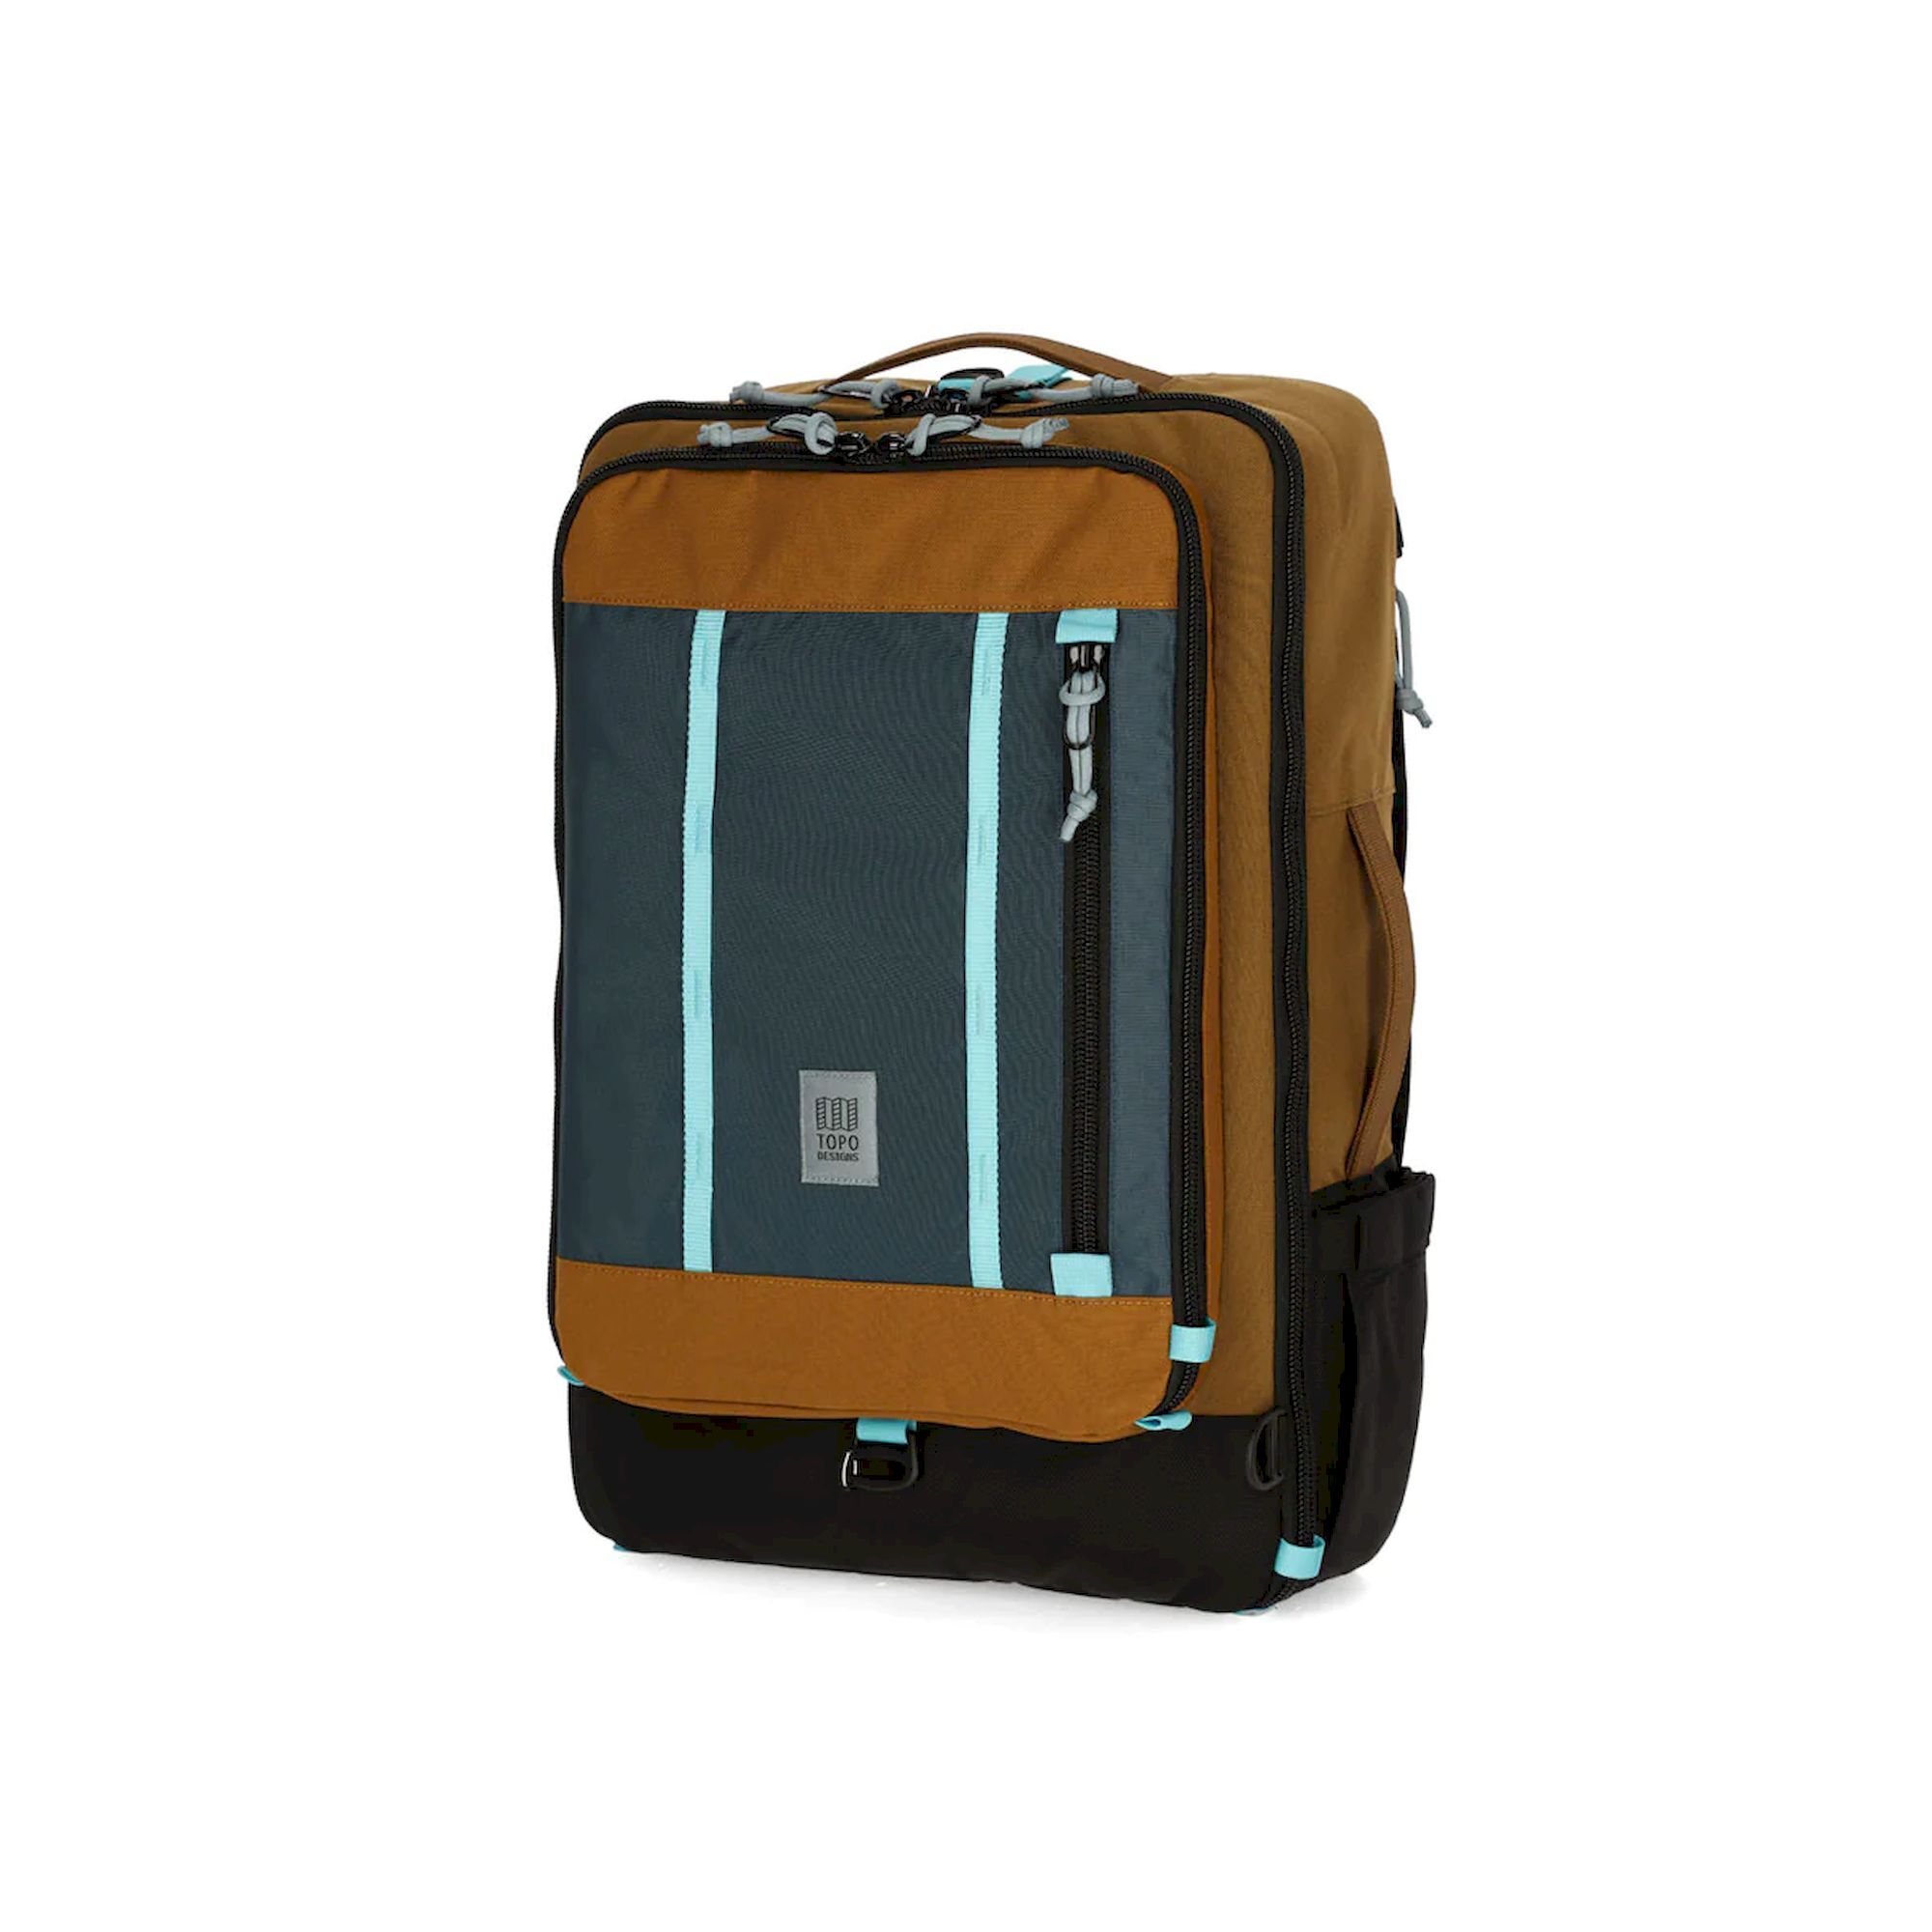 Topo Designs Global Travel Bag 30L - Reiserucksack